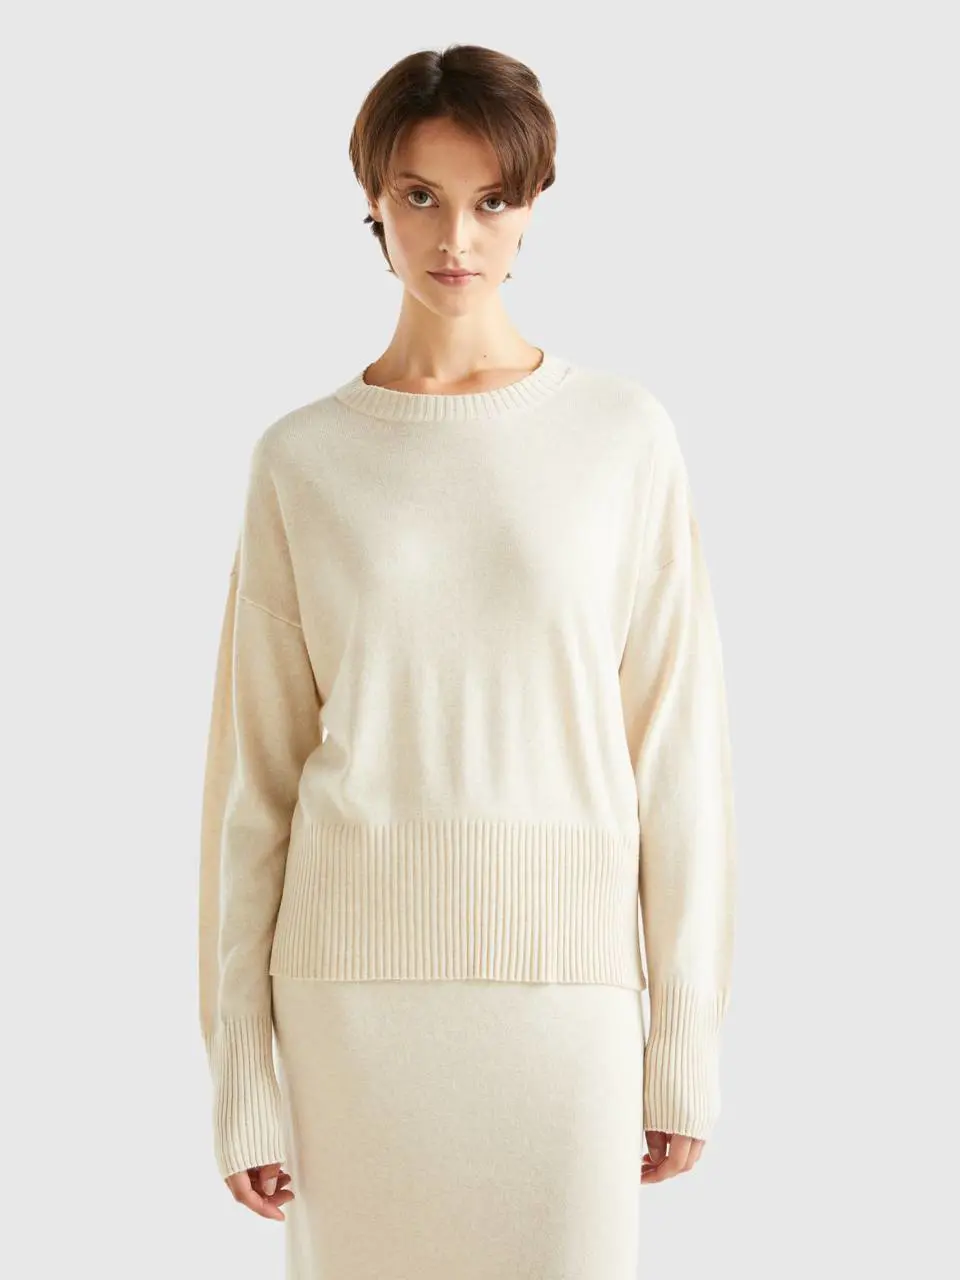 Benetton cashmere blend sweater. 1